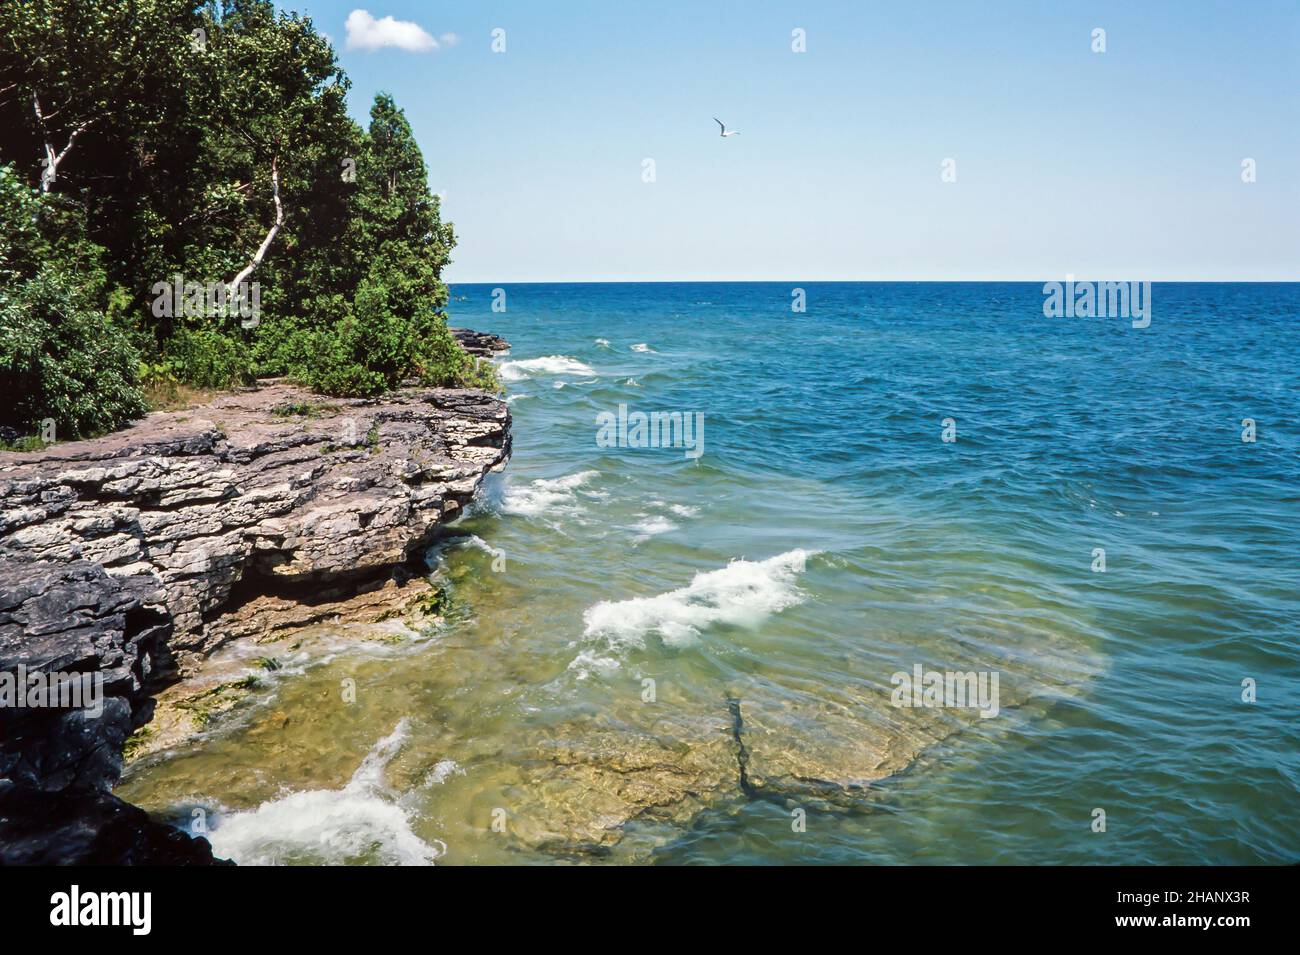 The rugged, rocky coastline of Lake Michigan along the Door County peninsula in Wisconsin. Stock Photo